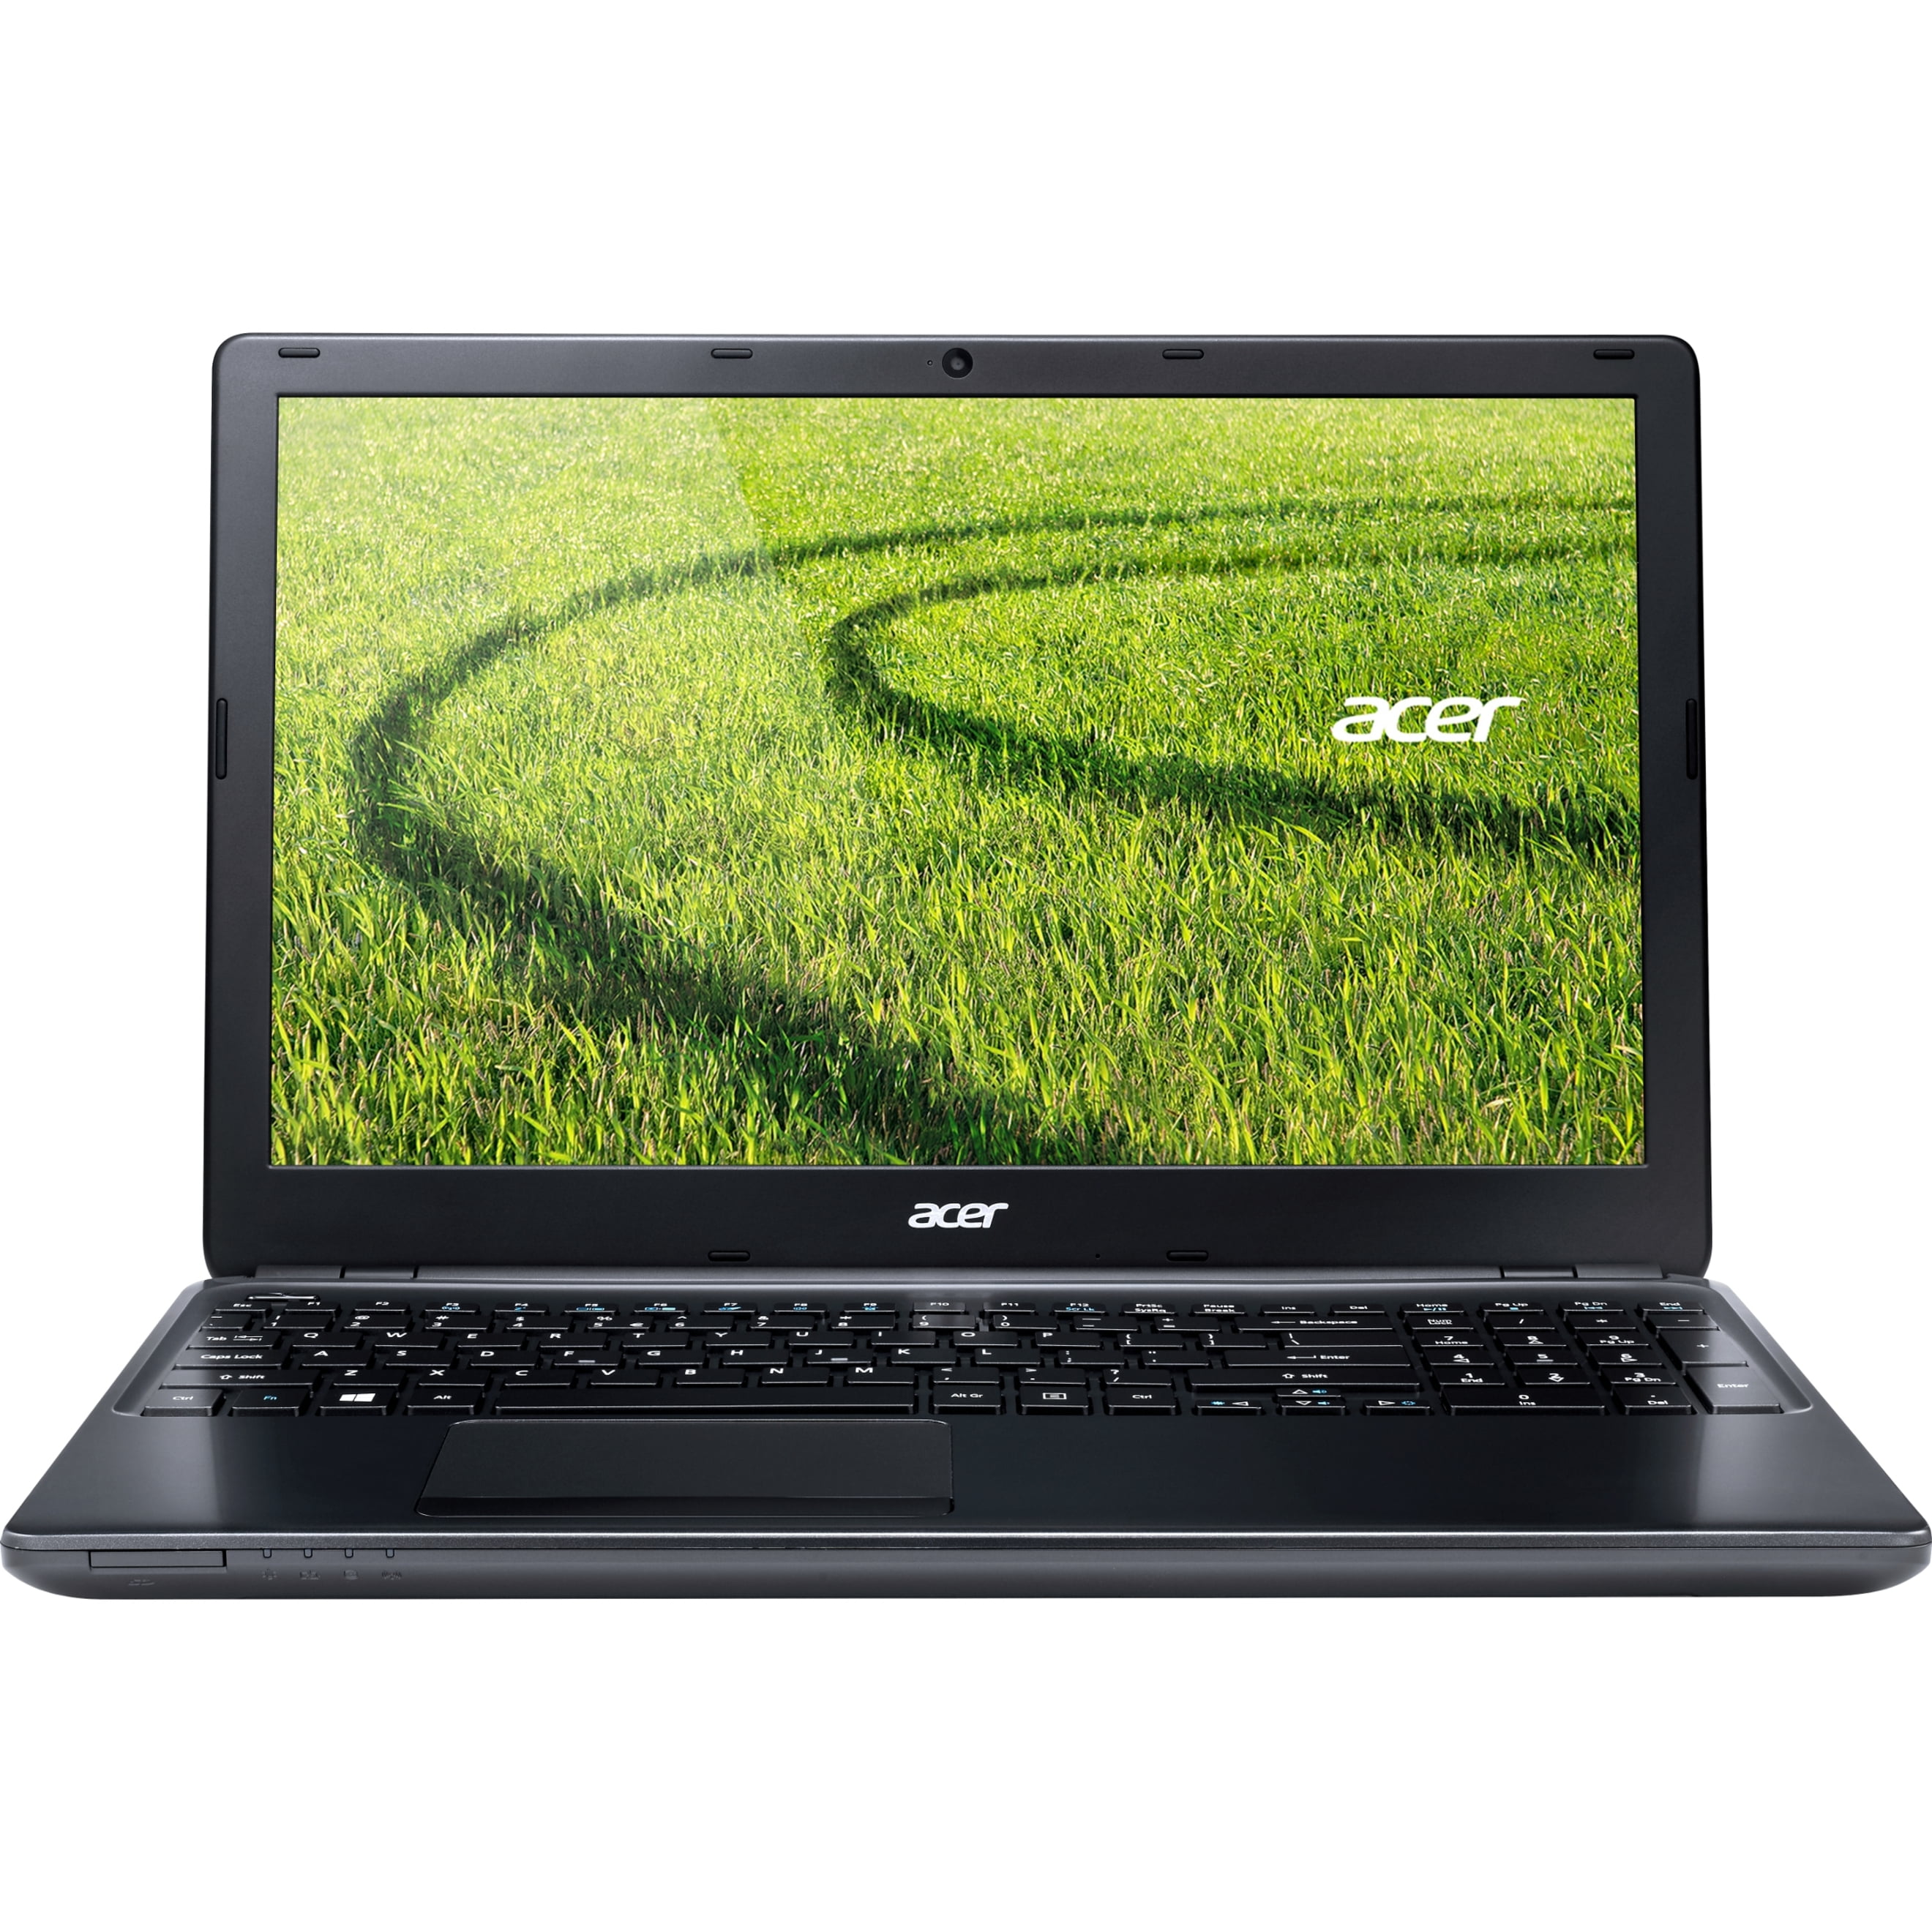 Tien interferentie Protestant Acer Aspire 15.6" Laptop, Intel Core i3 i3-4010U, 500GB HD, DVD Writer,  Windows 7 Home Premium, E1-572-34014G50Mnrr - Walmart.com